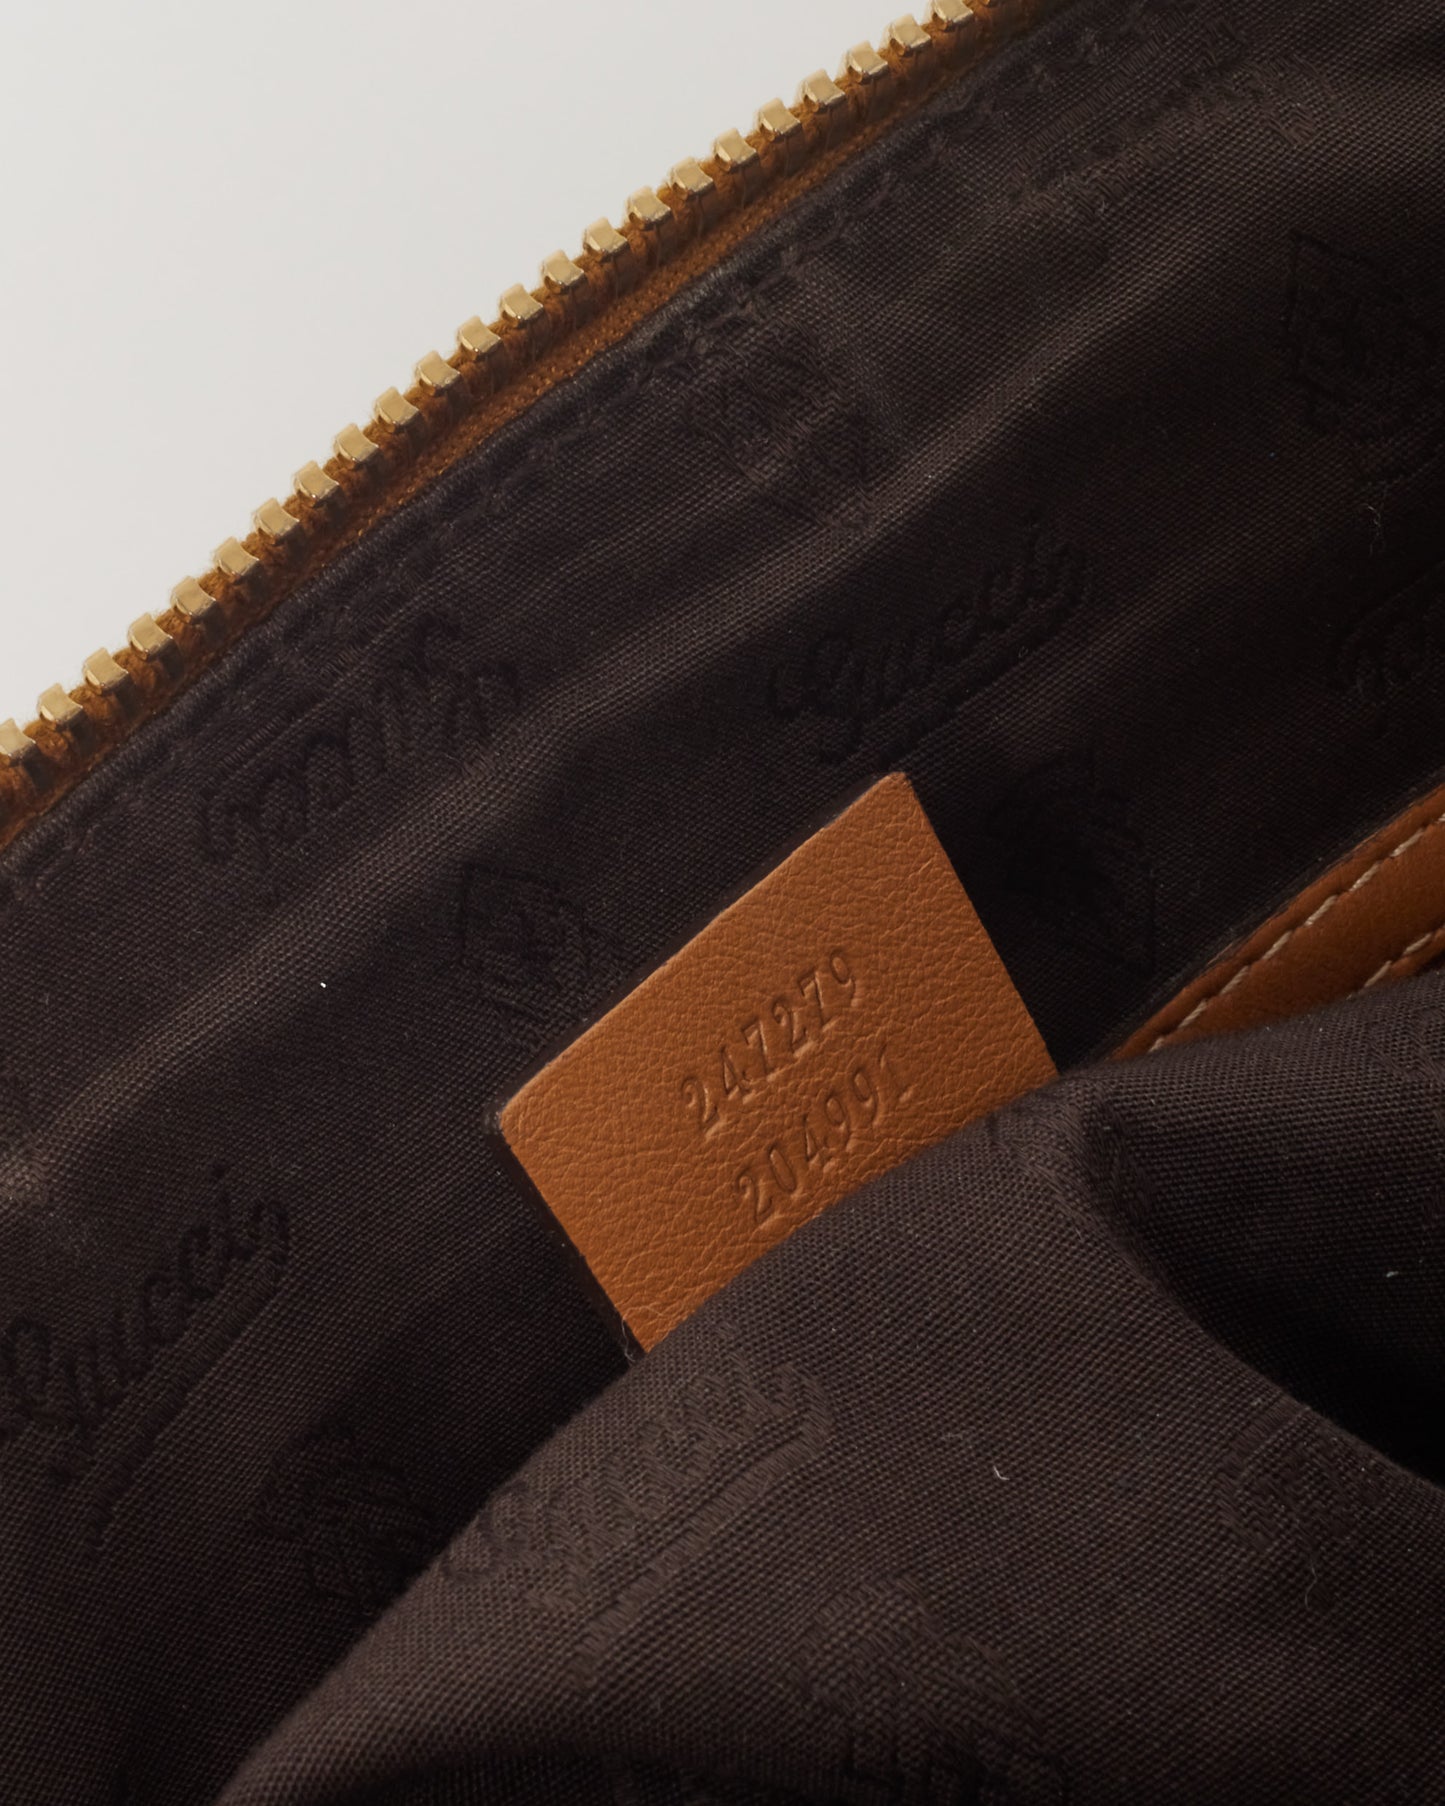 Gucci Tan Leather Guccissima Shoulder Bag